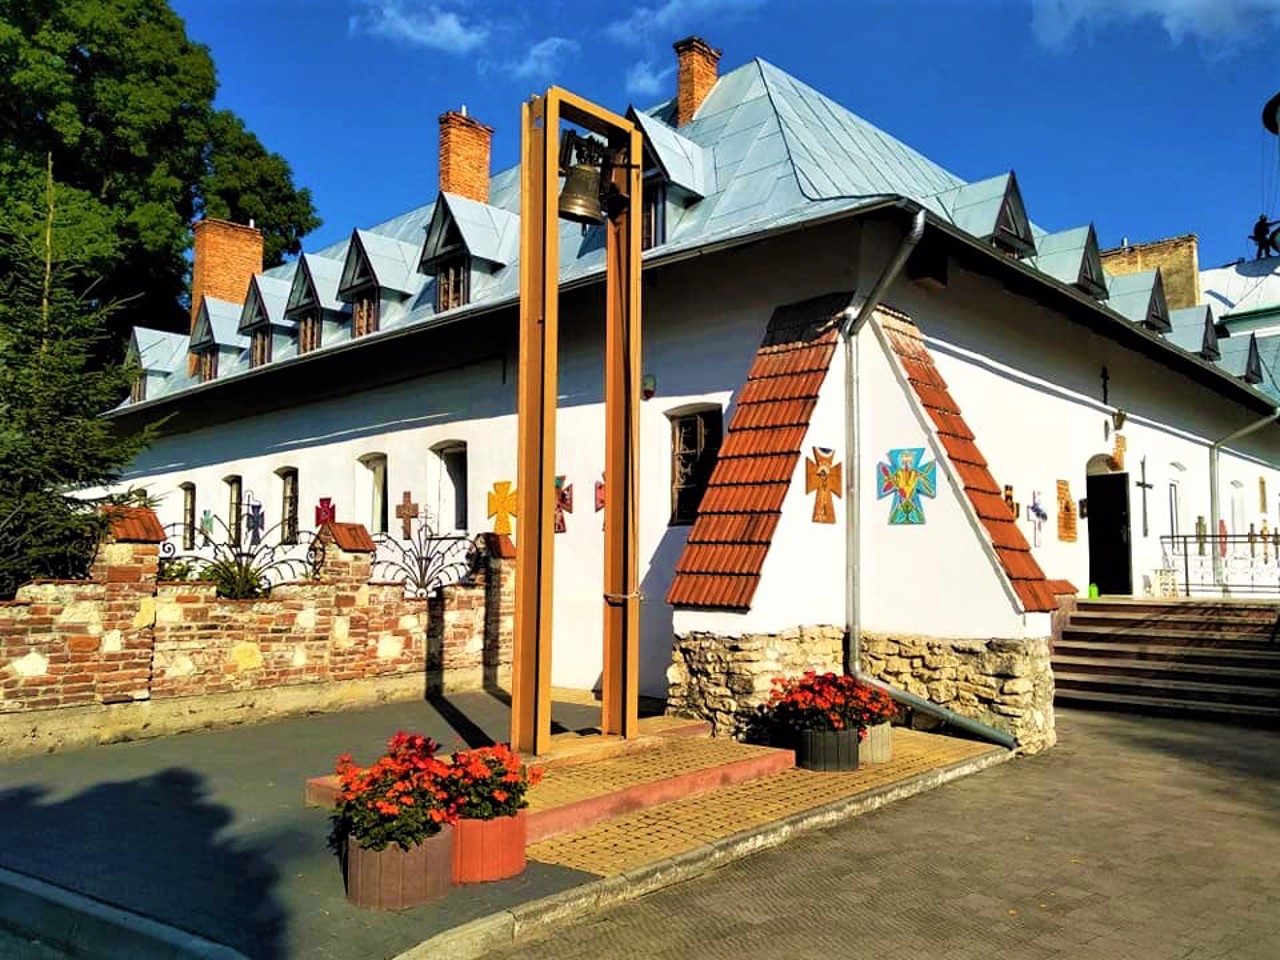 Transfiguration Monastery, Horodok